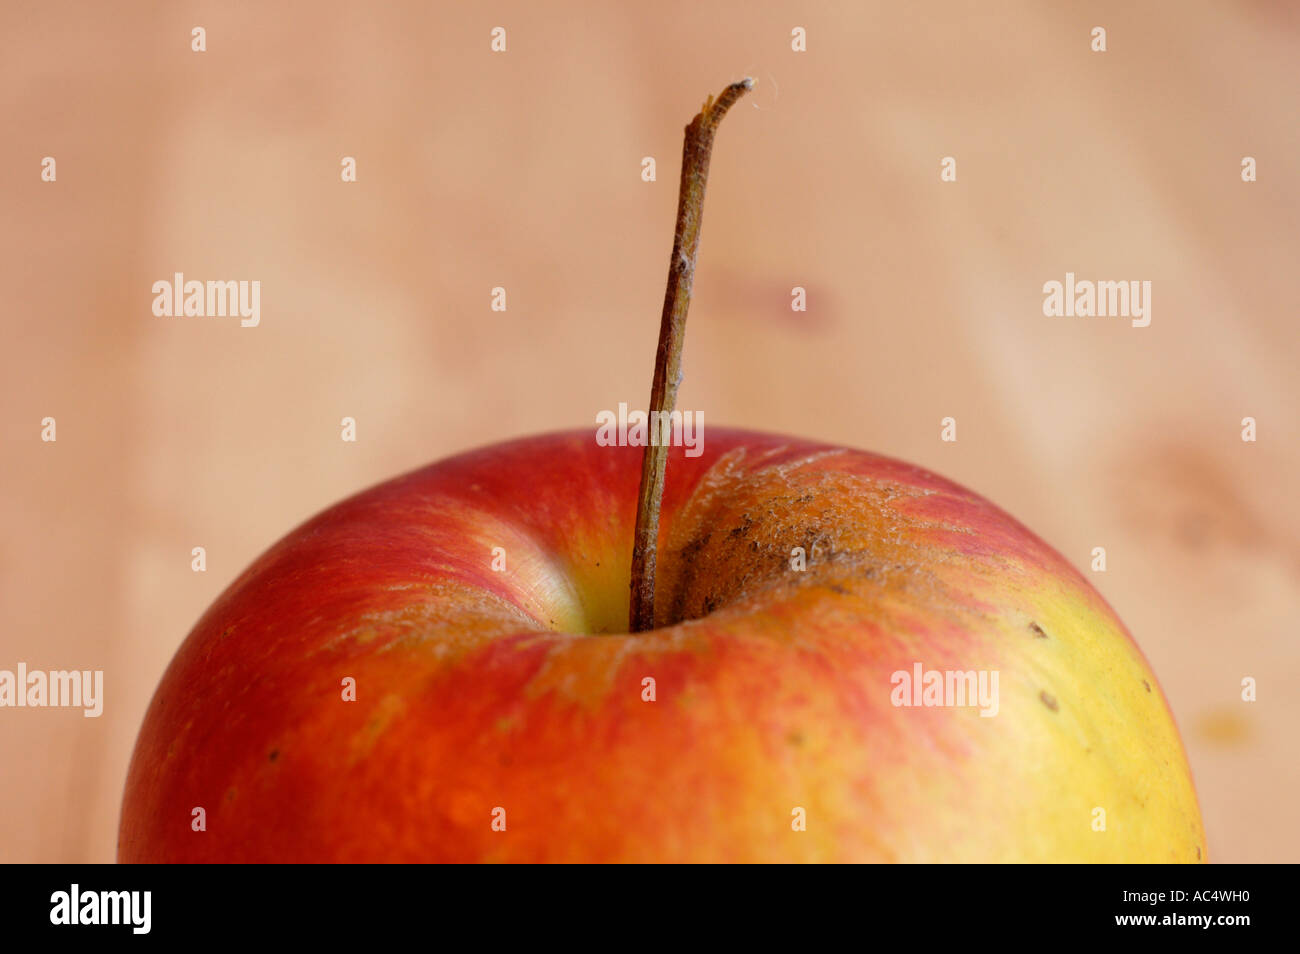 fruit apple Stock Photo